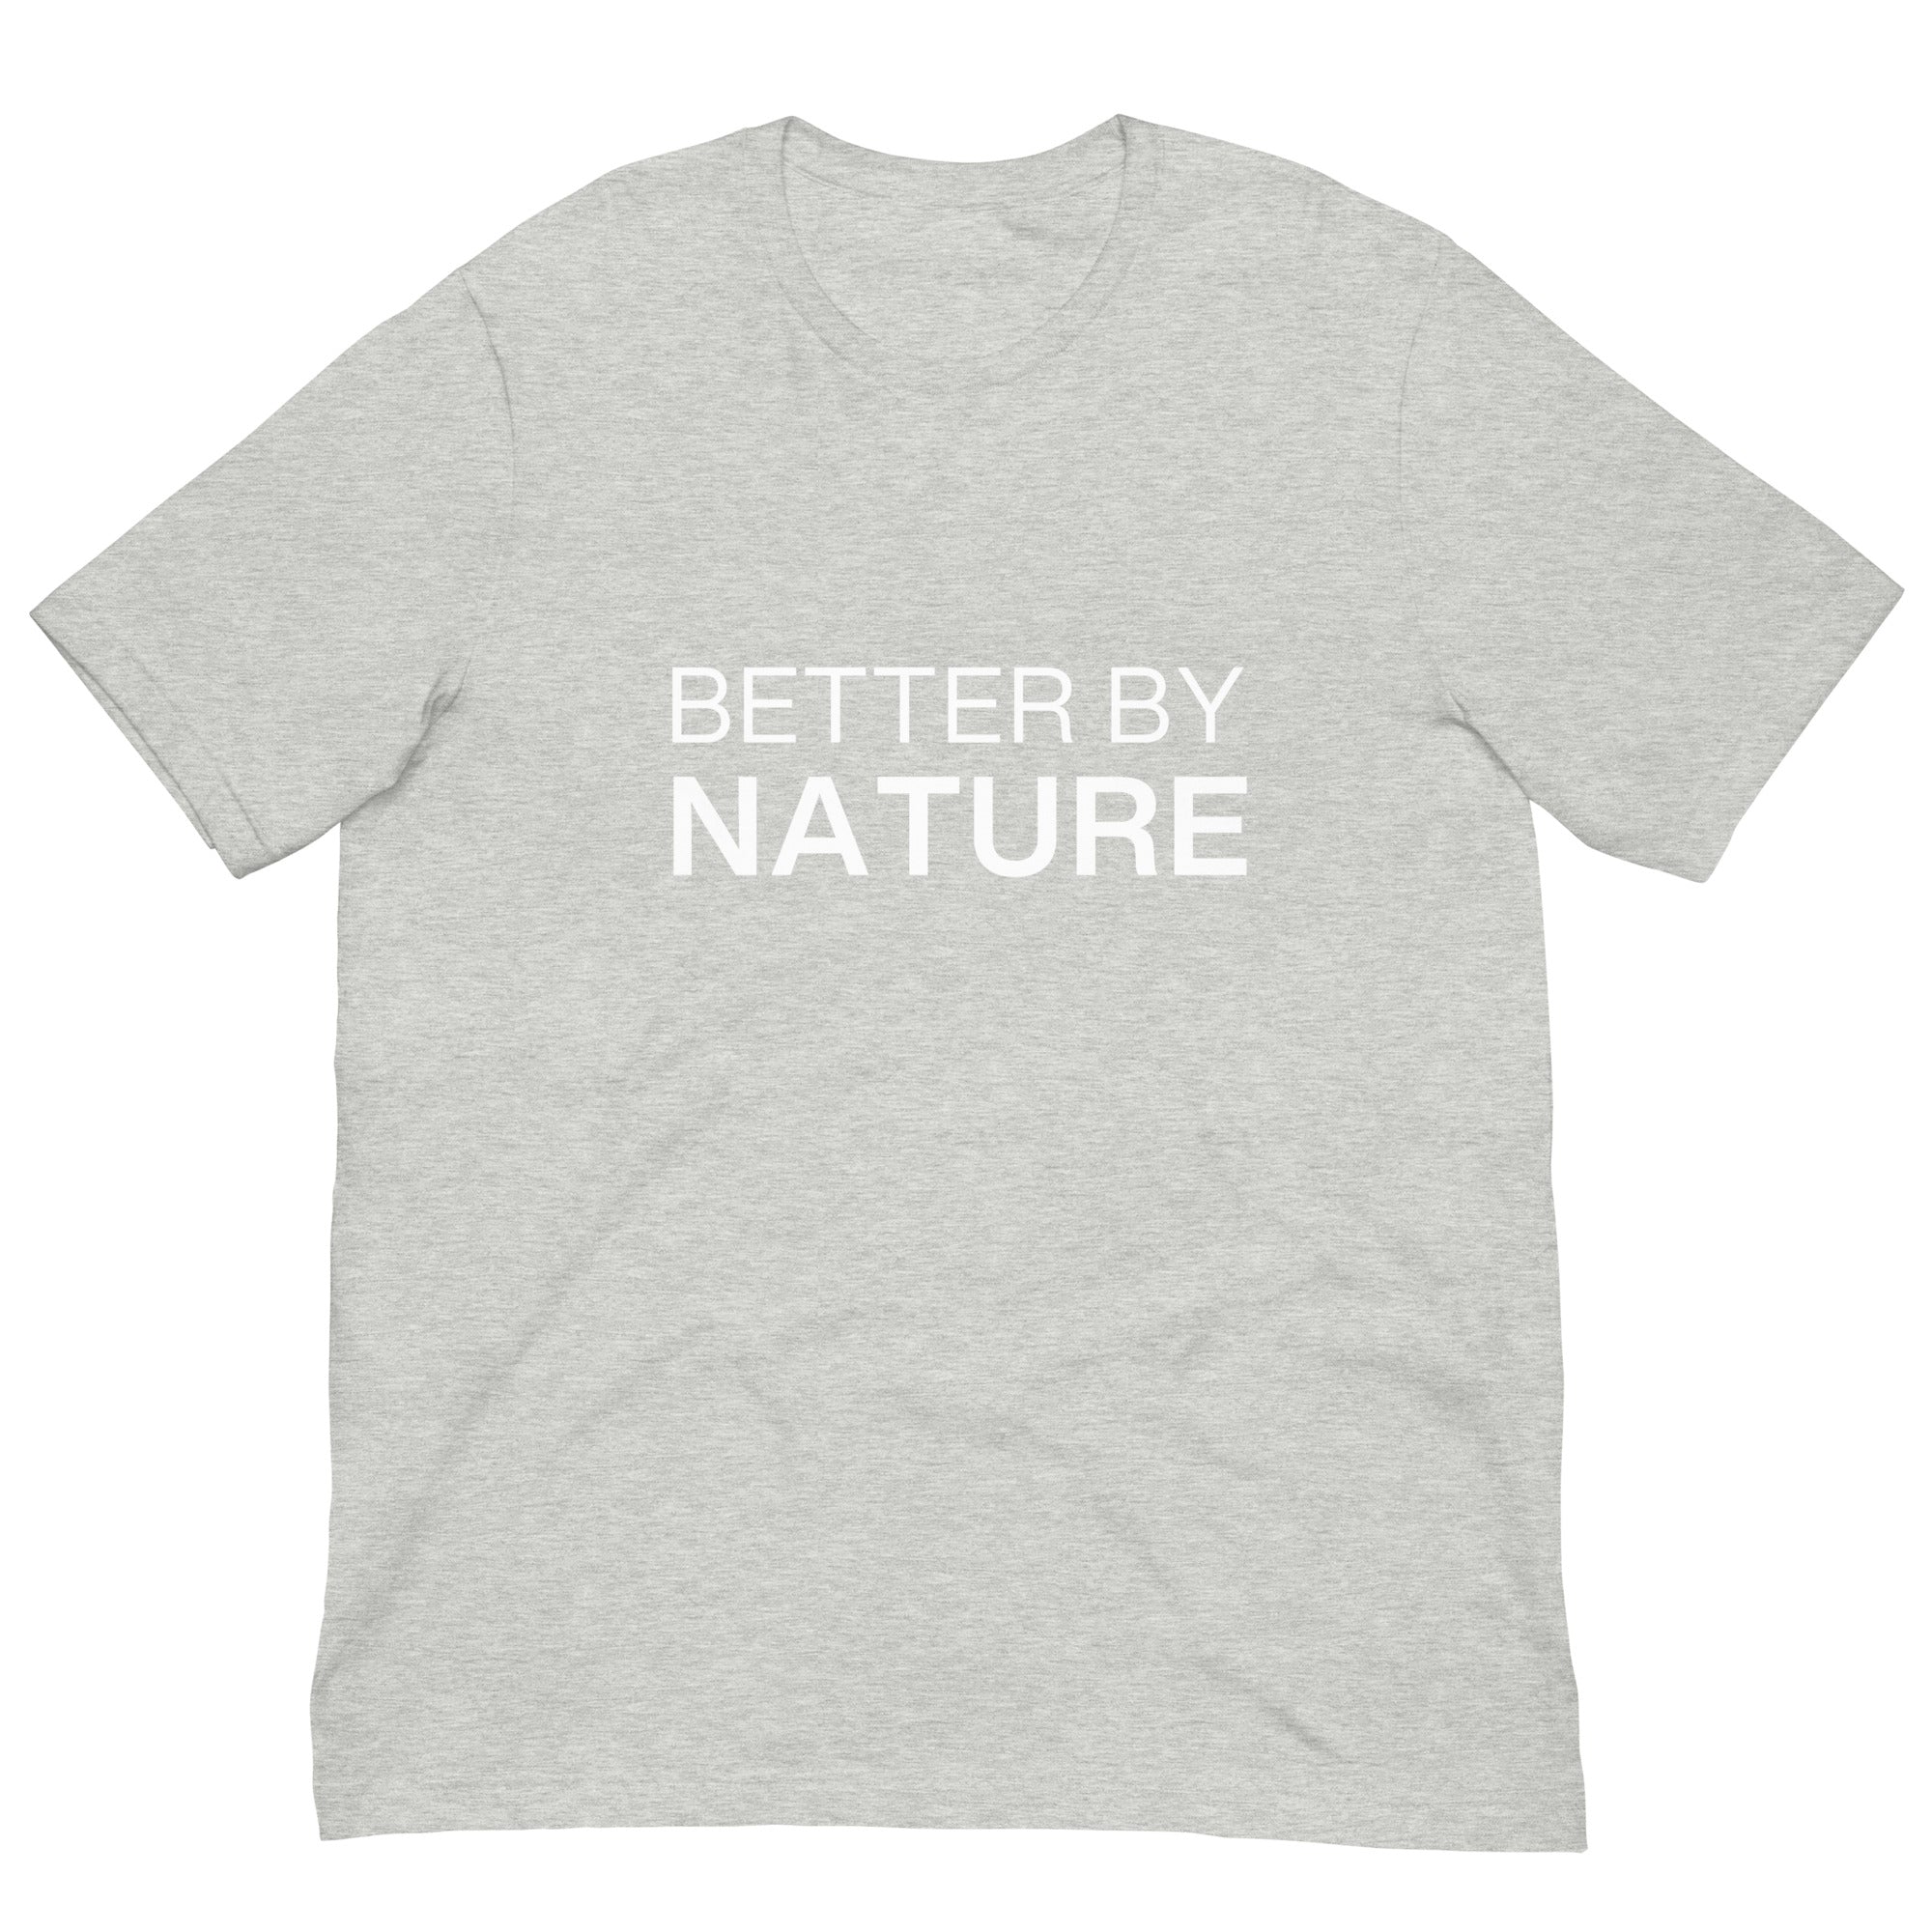 BETTER BY NATURE Unisex Short Sleeve Tee Shirt